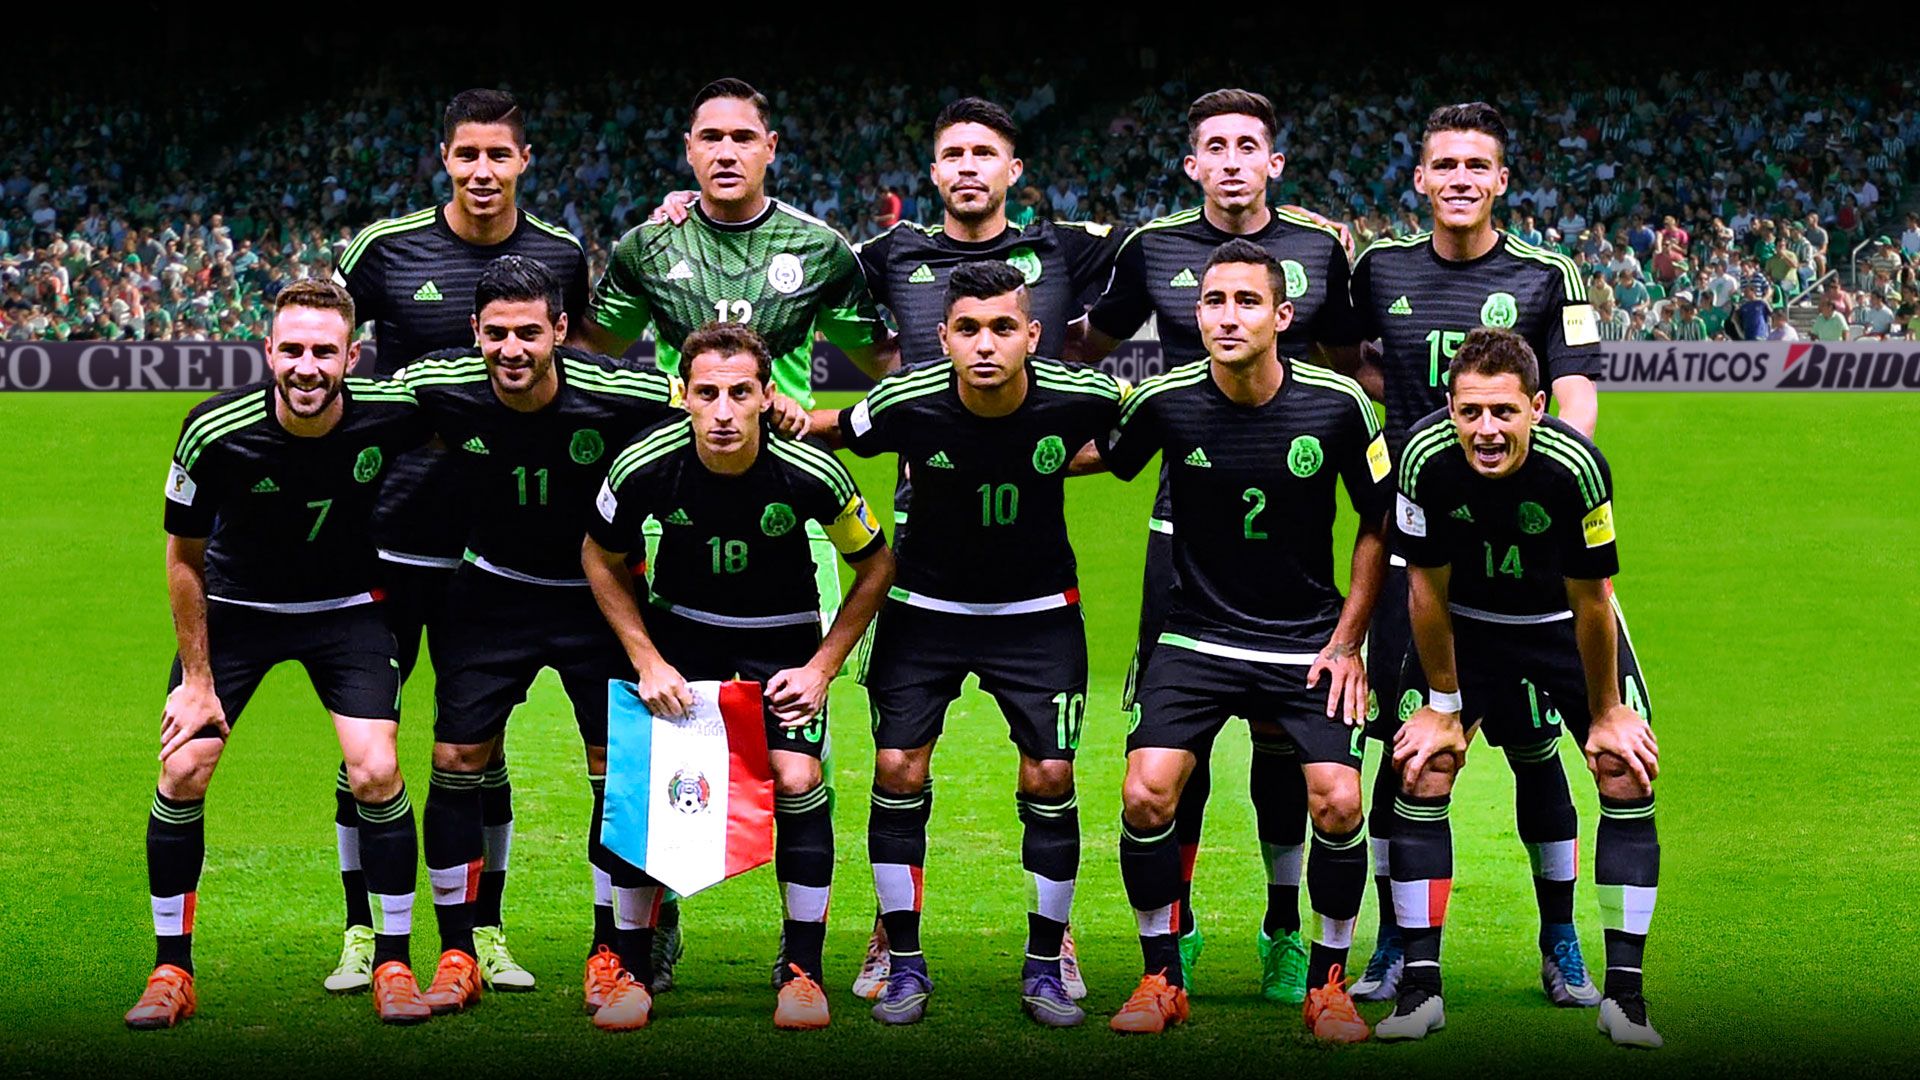 Team Mexico 9ine Femexfut Wallpaper